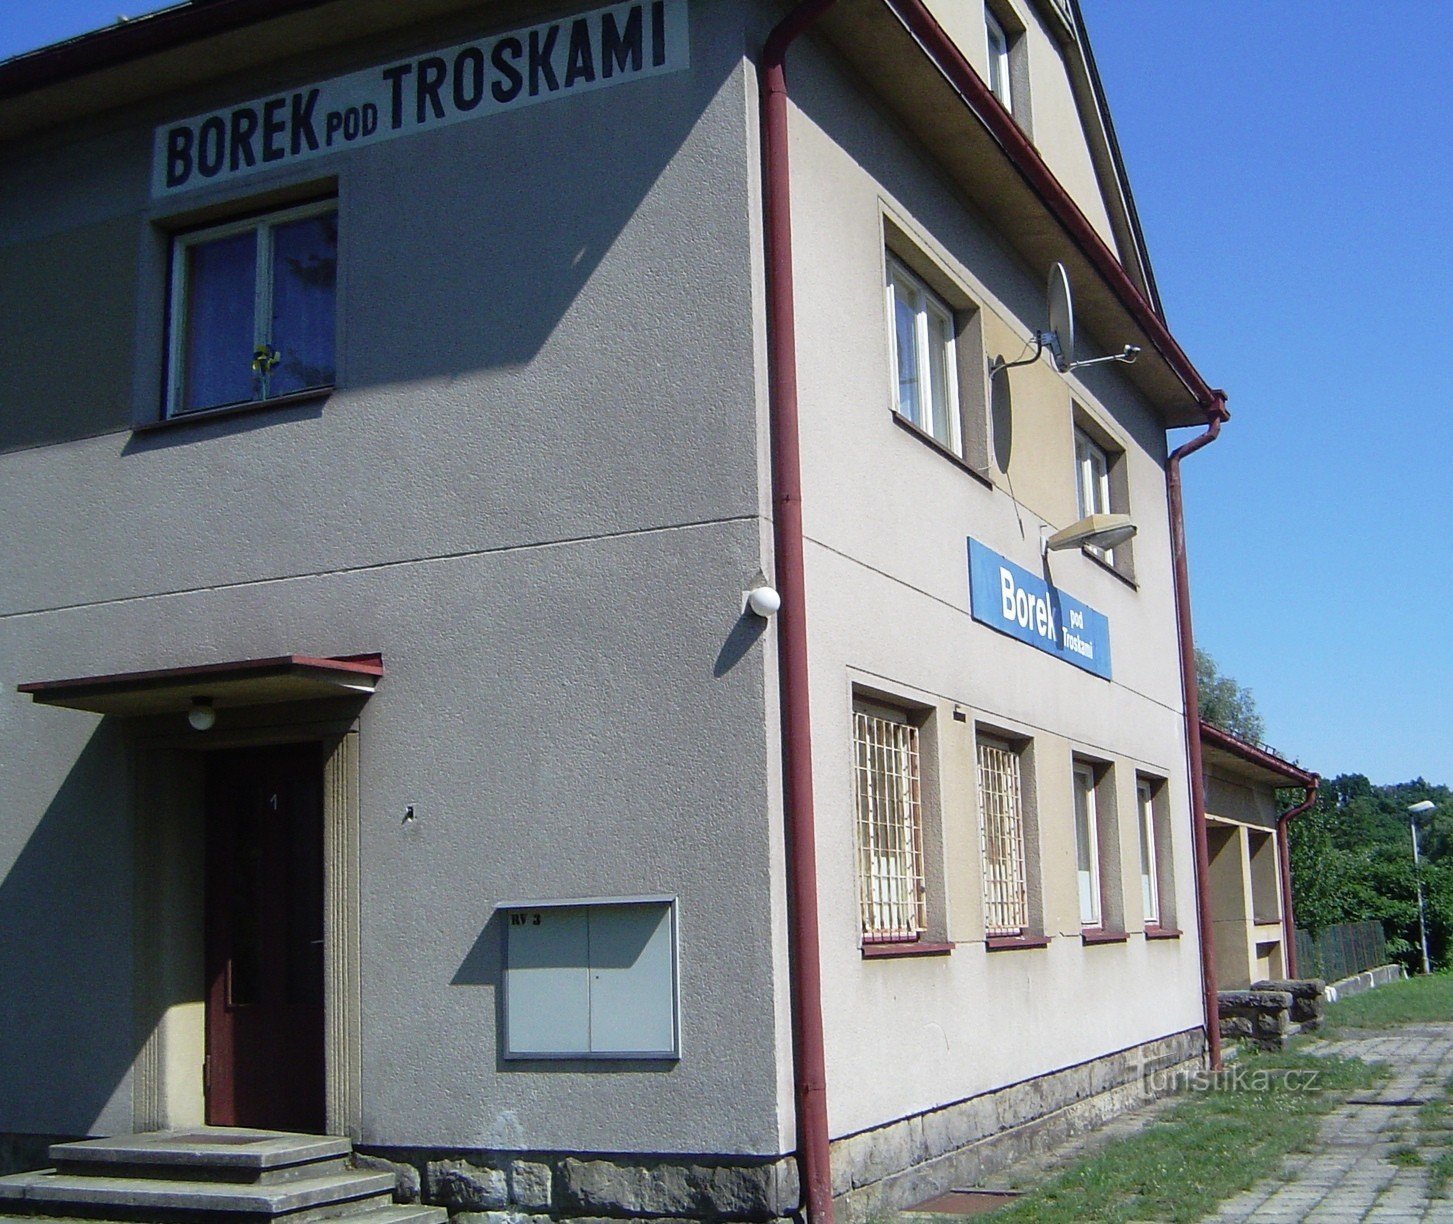 Borek pod Troskami - sorry. station